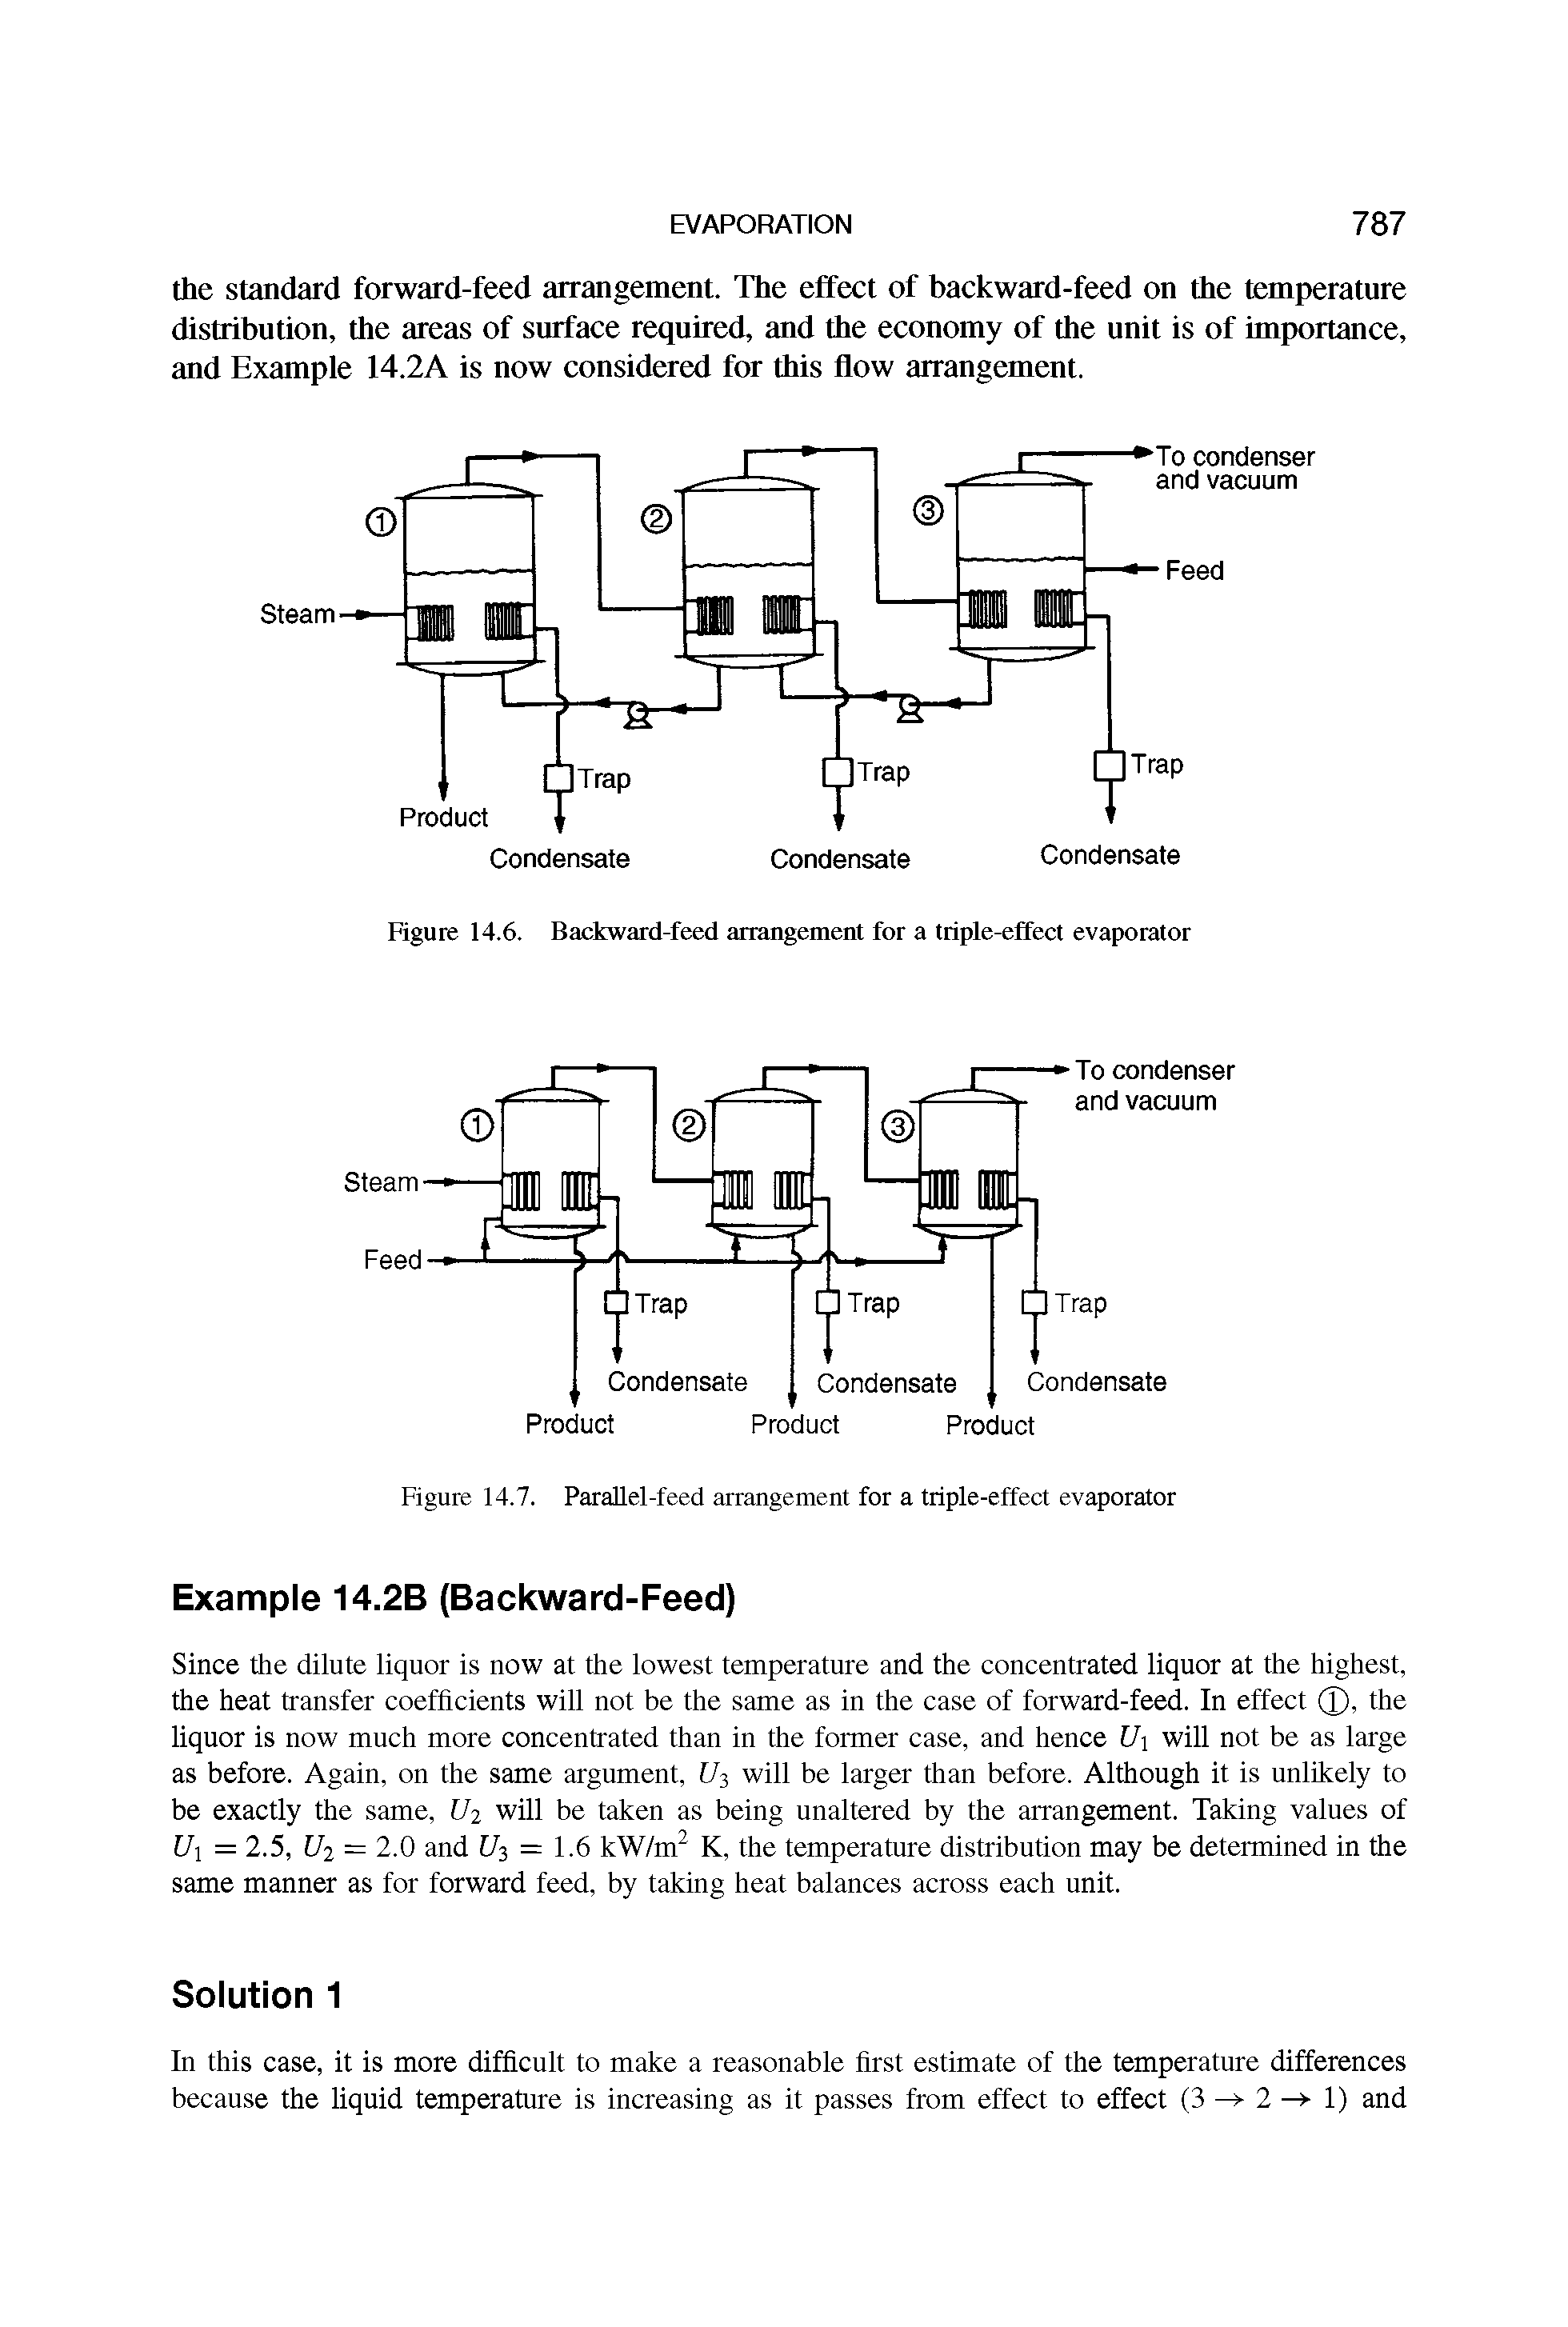 Figure 14.7. Parallel-feed arrangement for a triple-effect evaporator...